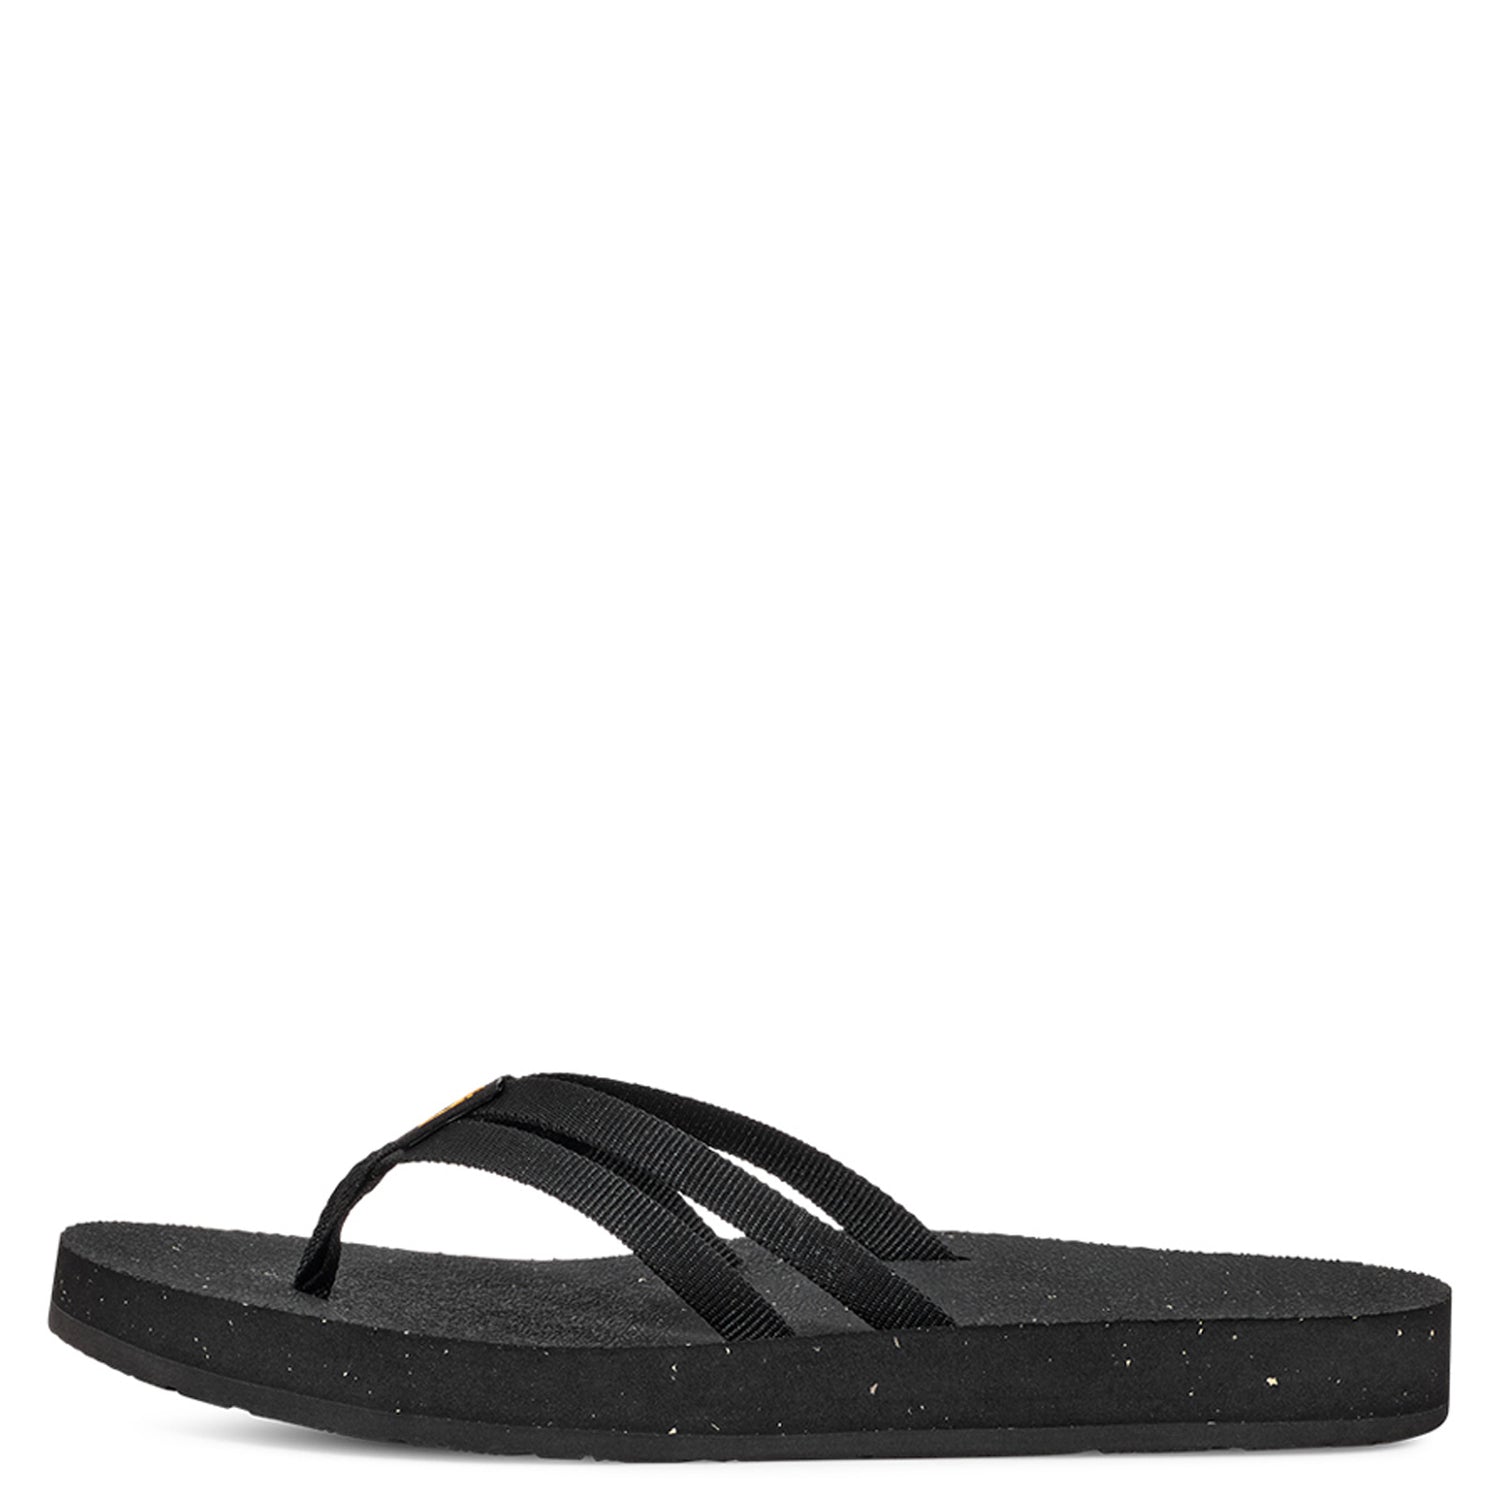 Peltz Shoes  Women's Teva Reflip Strappy Sandal BLACK 1134350-BLK